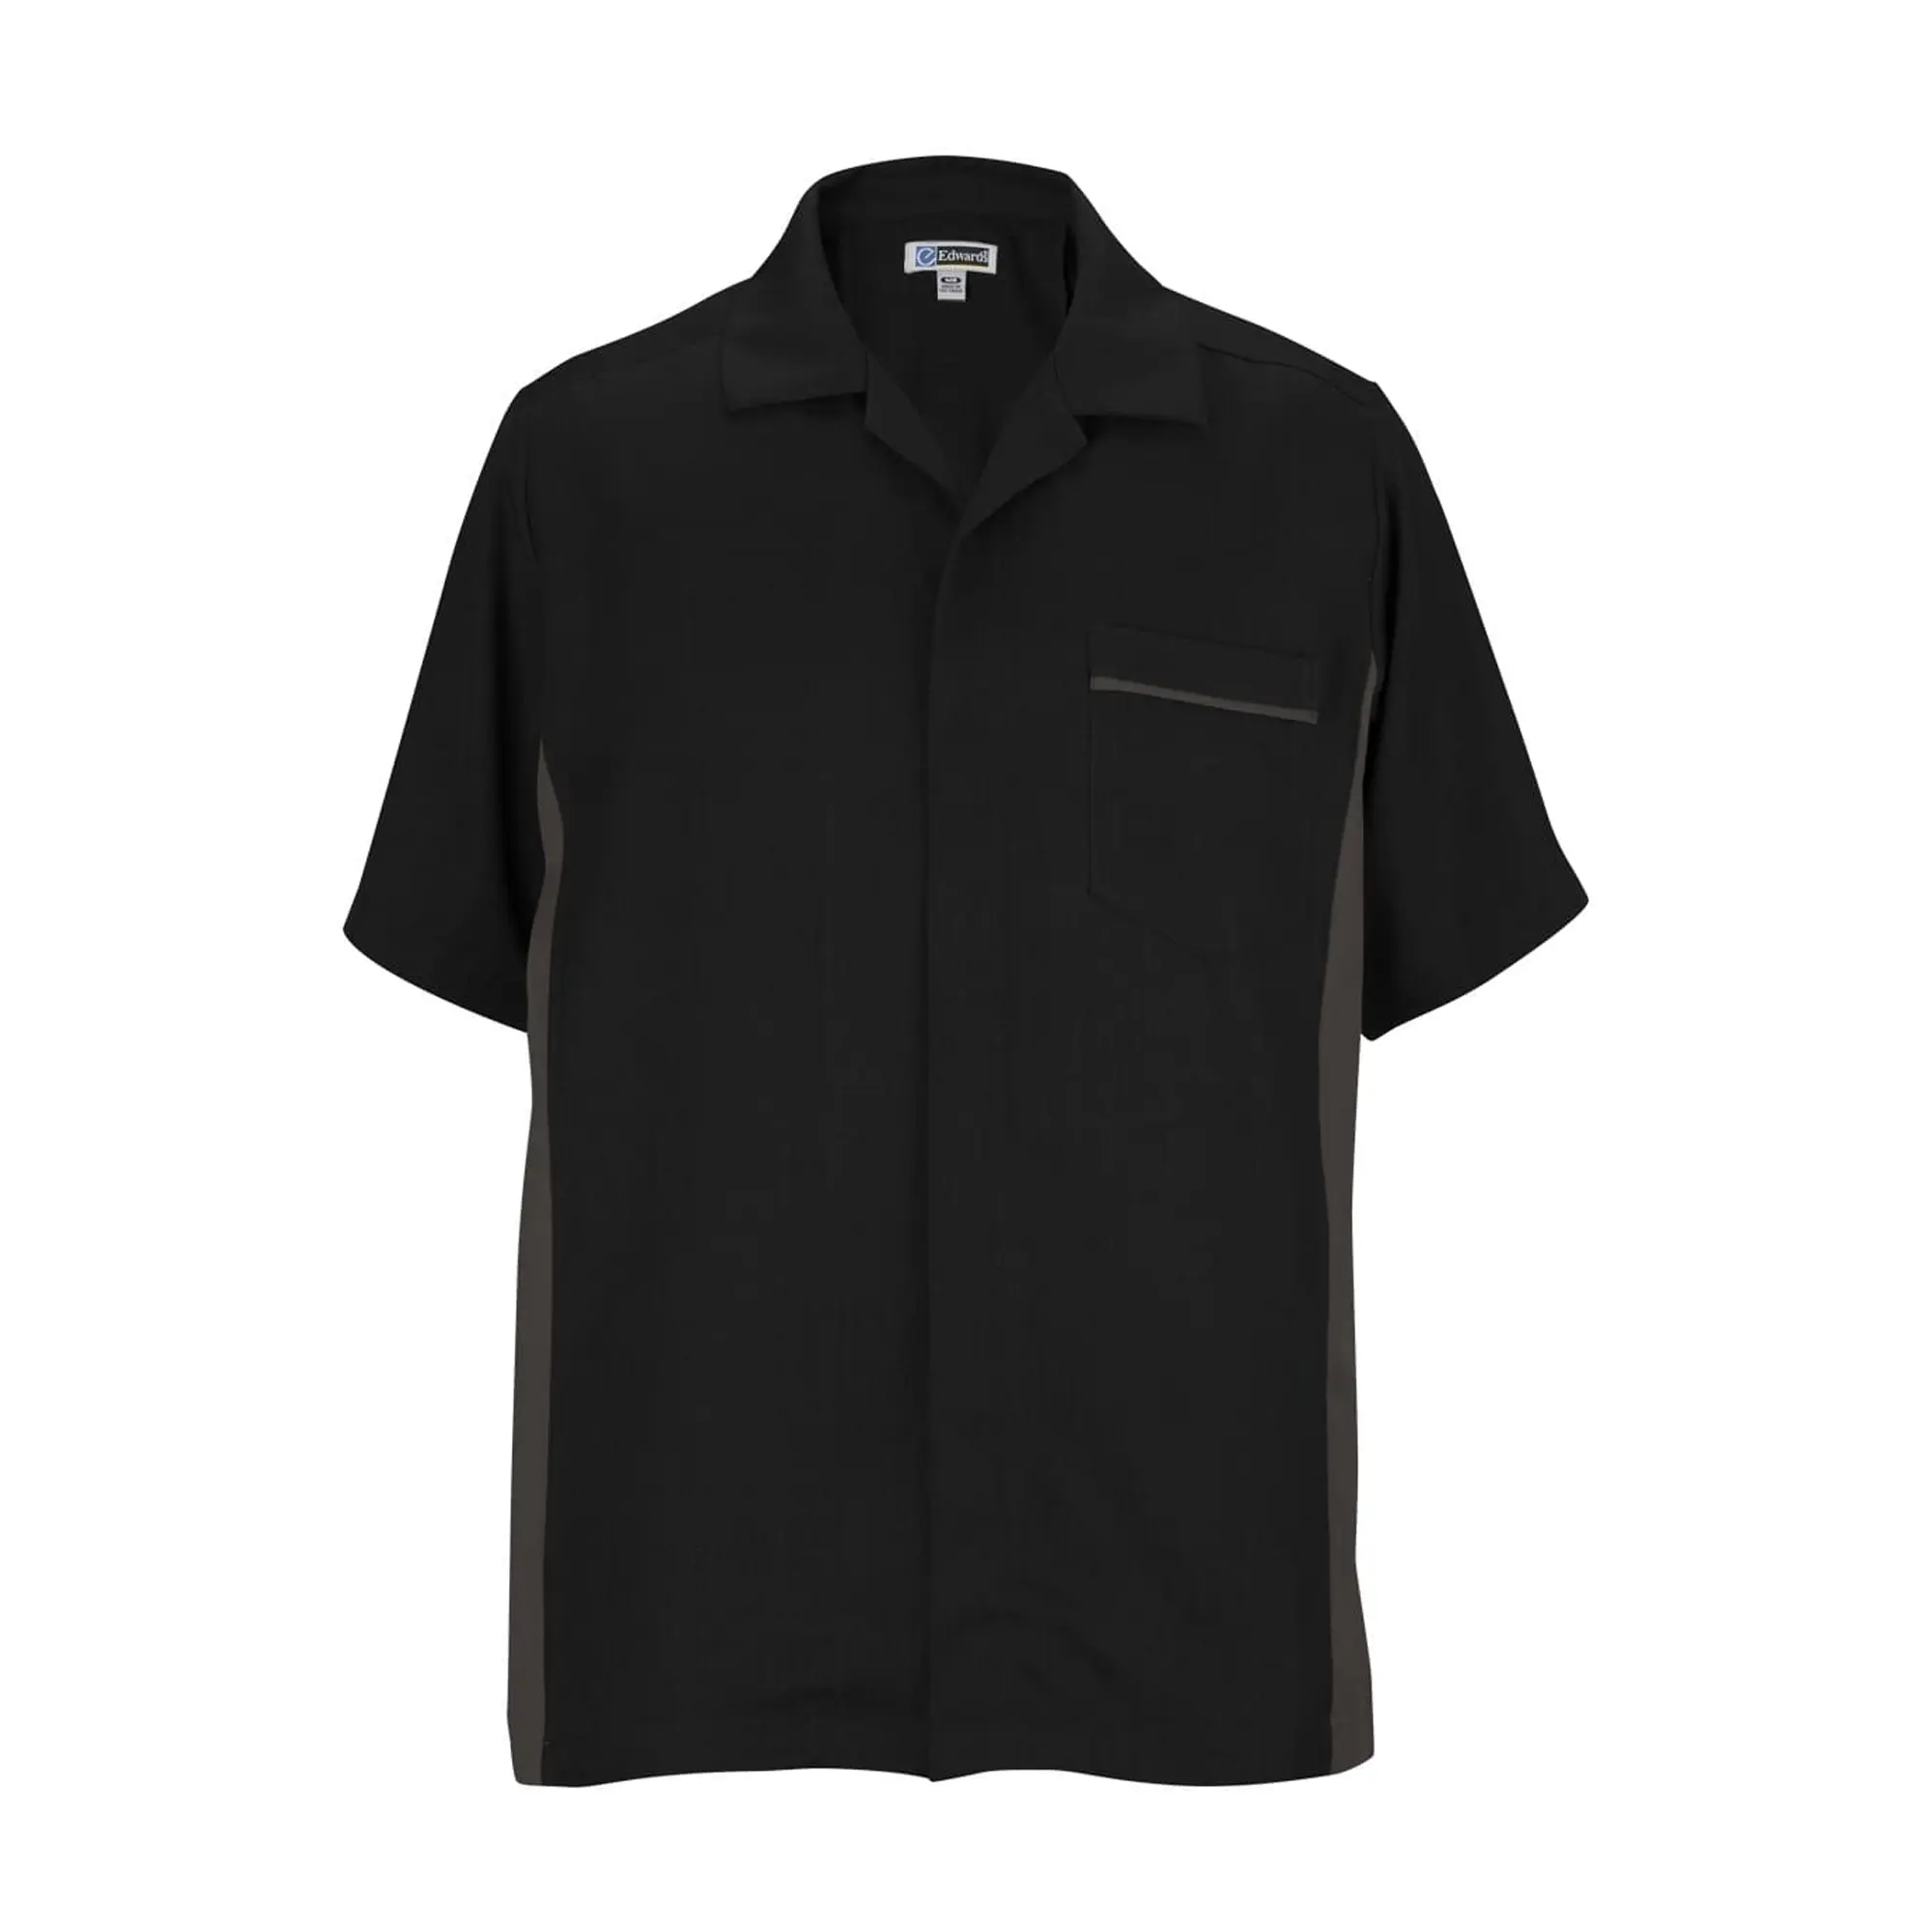 Edwards premier service shirt black